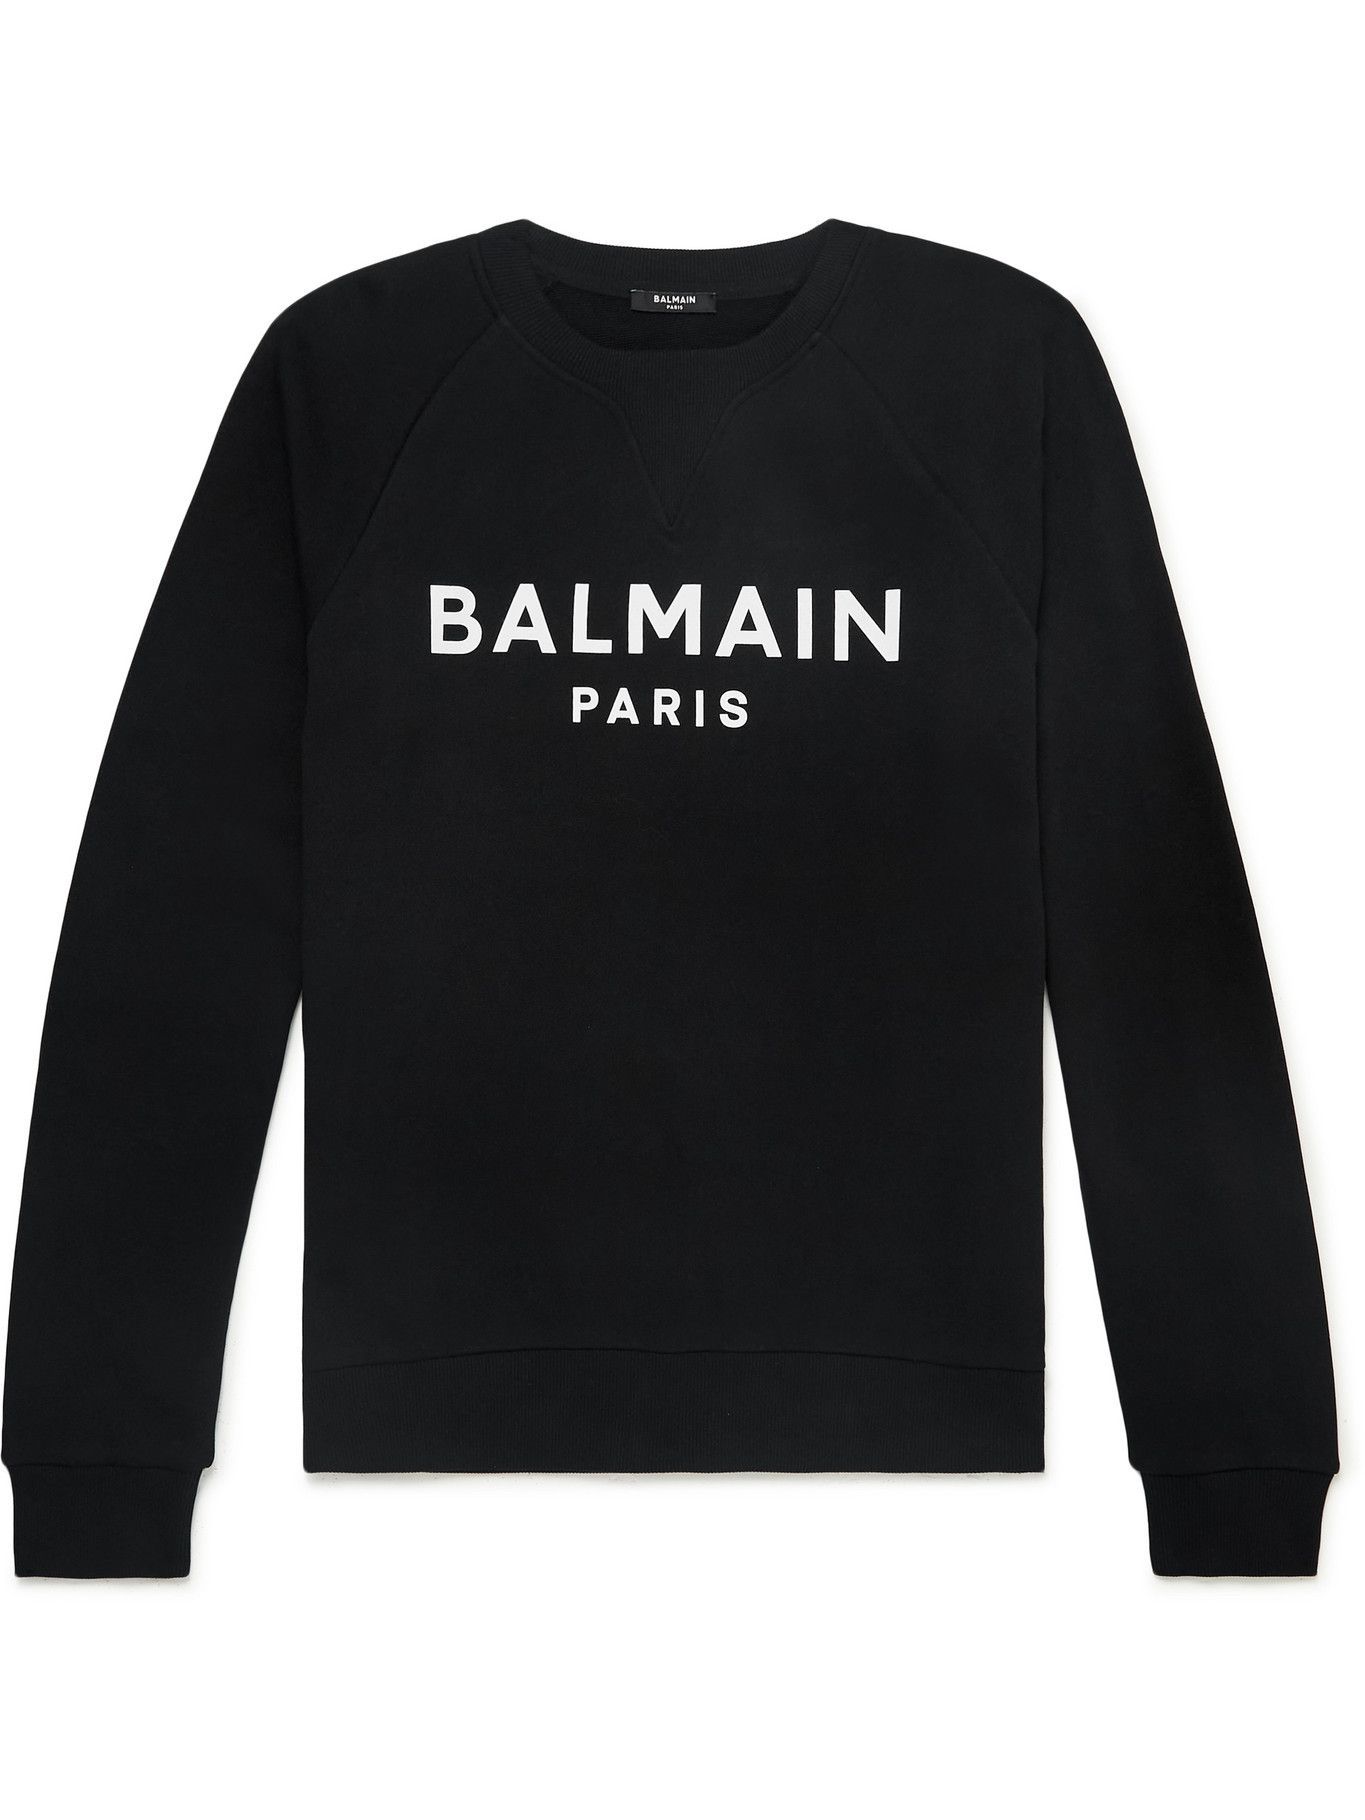 BALMAIN - Logo-Print Cotton-Jersey Sweatshirt - Black Balmain